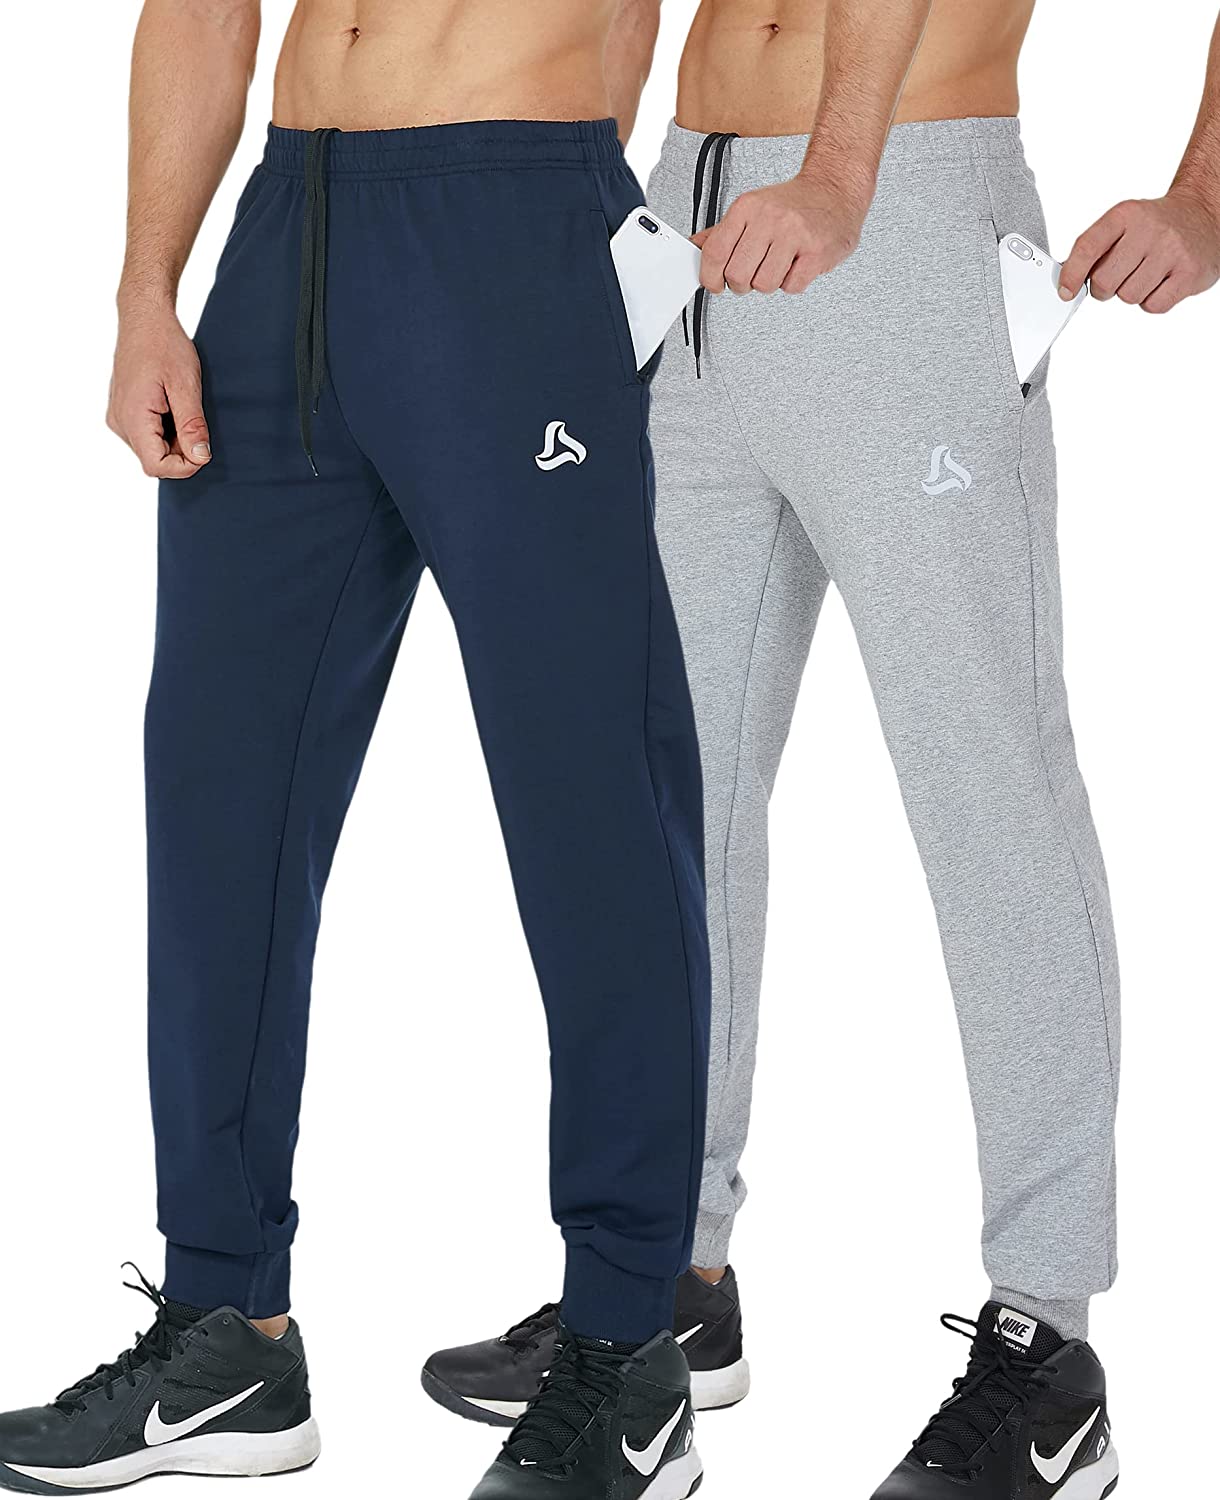 SILKWORLD 1~2 Pack Men's Sweatpants with Zipper Pockets Athletic Lounge Jogger Pants 